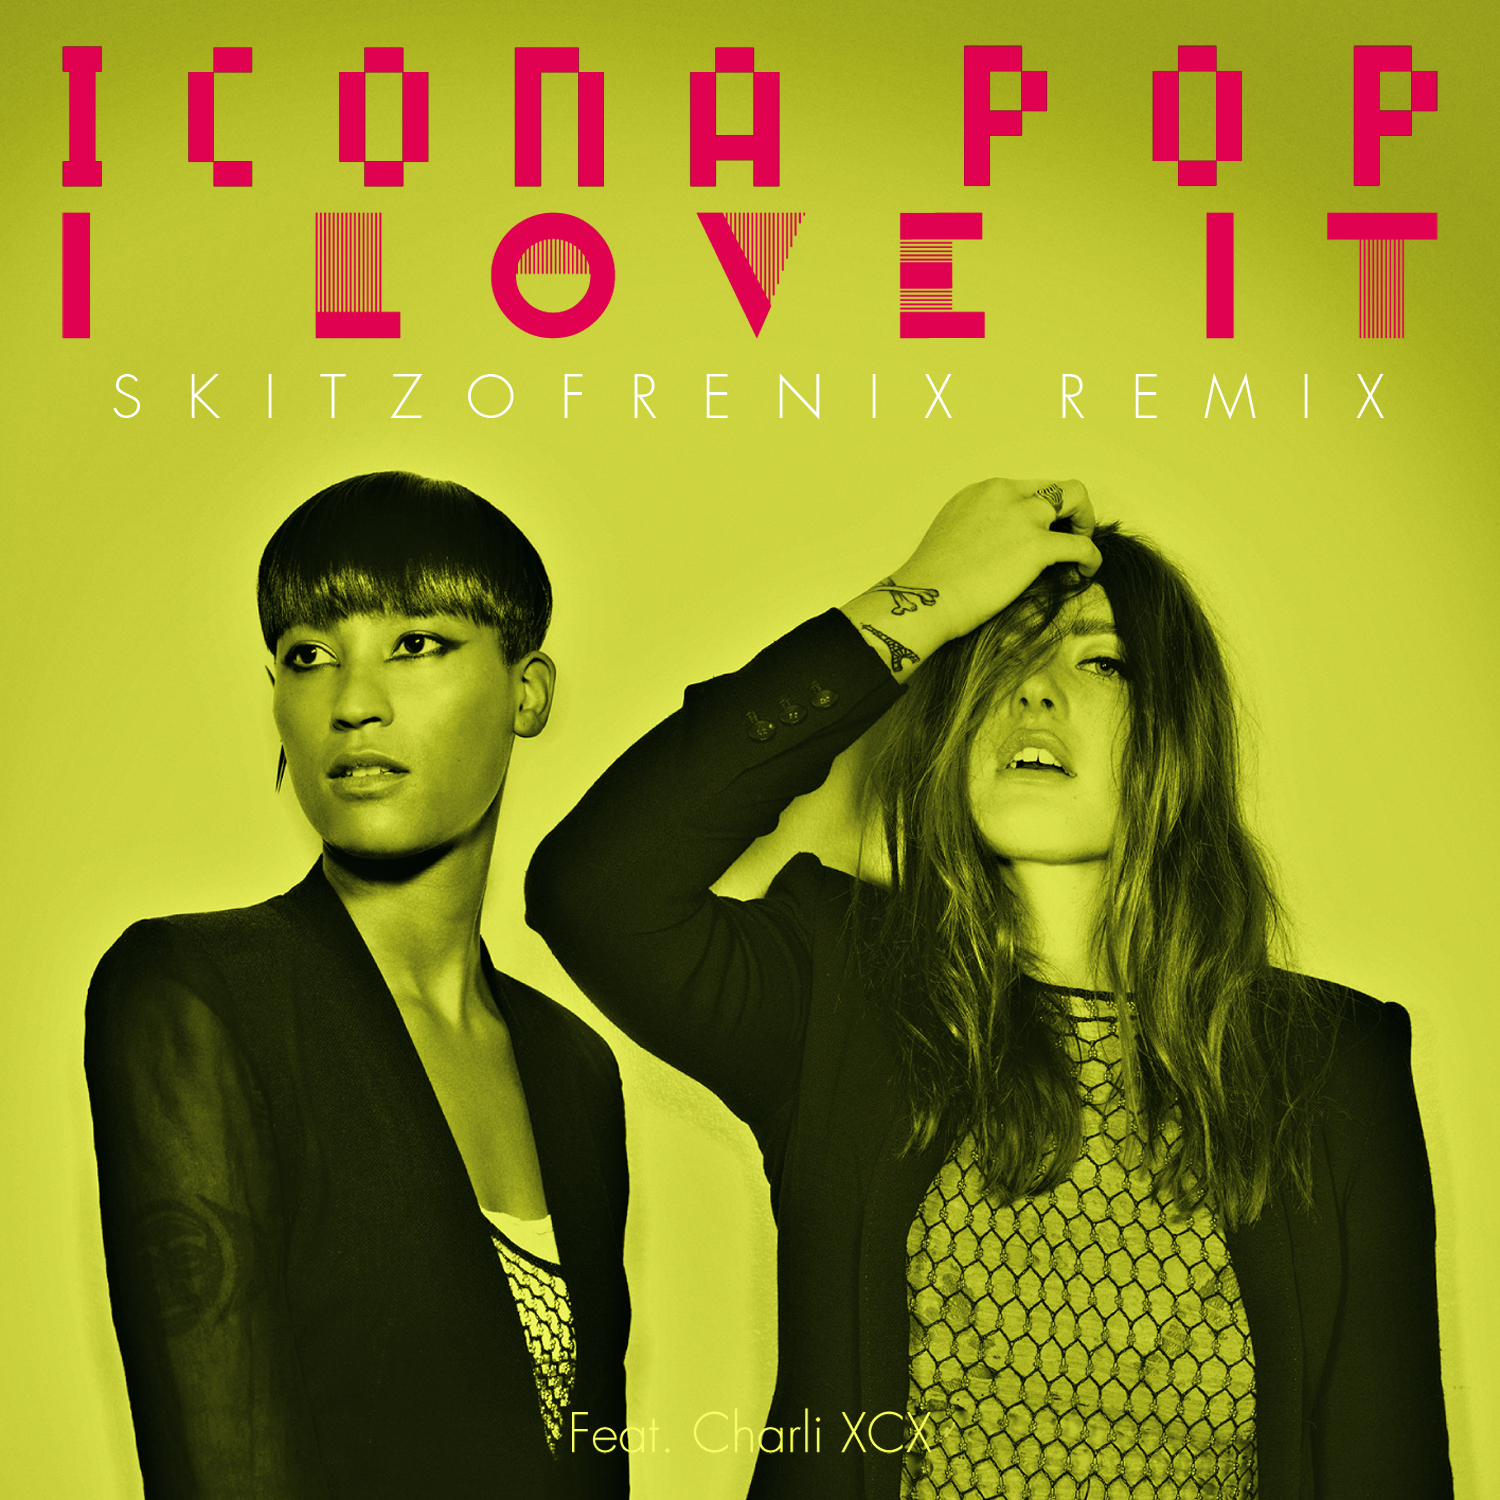 LISTEN: Icona Pop – “I Love It” (Feat. Charli XCX) (Skitzofrenix Remix) EXCLUSIVE STREAM!